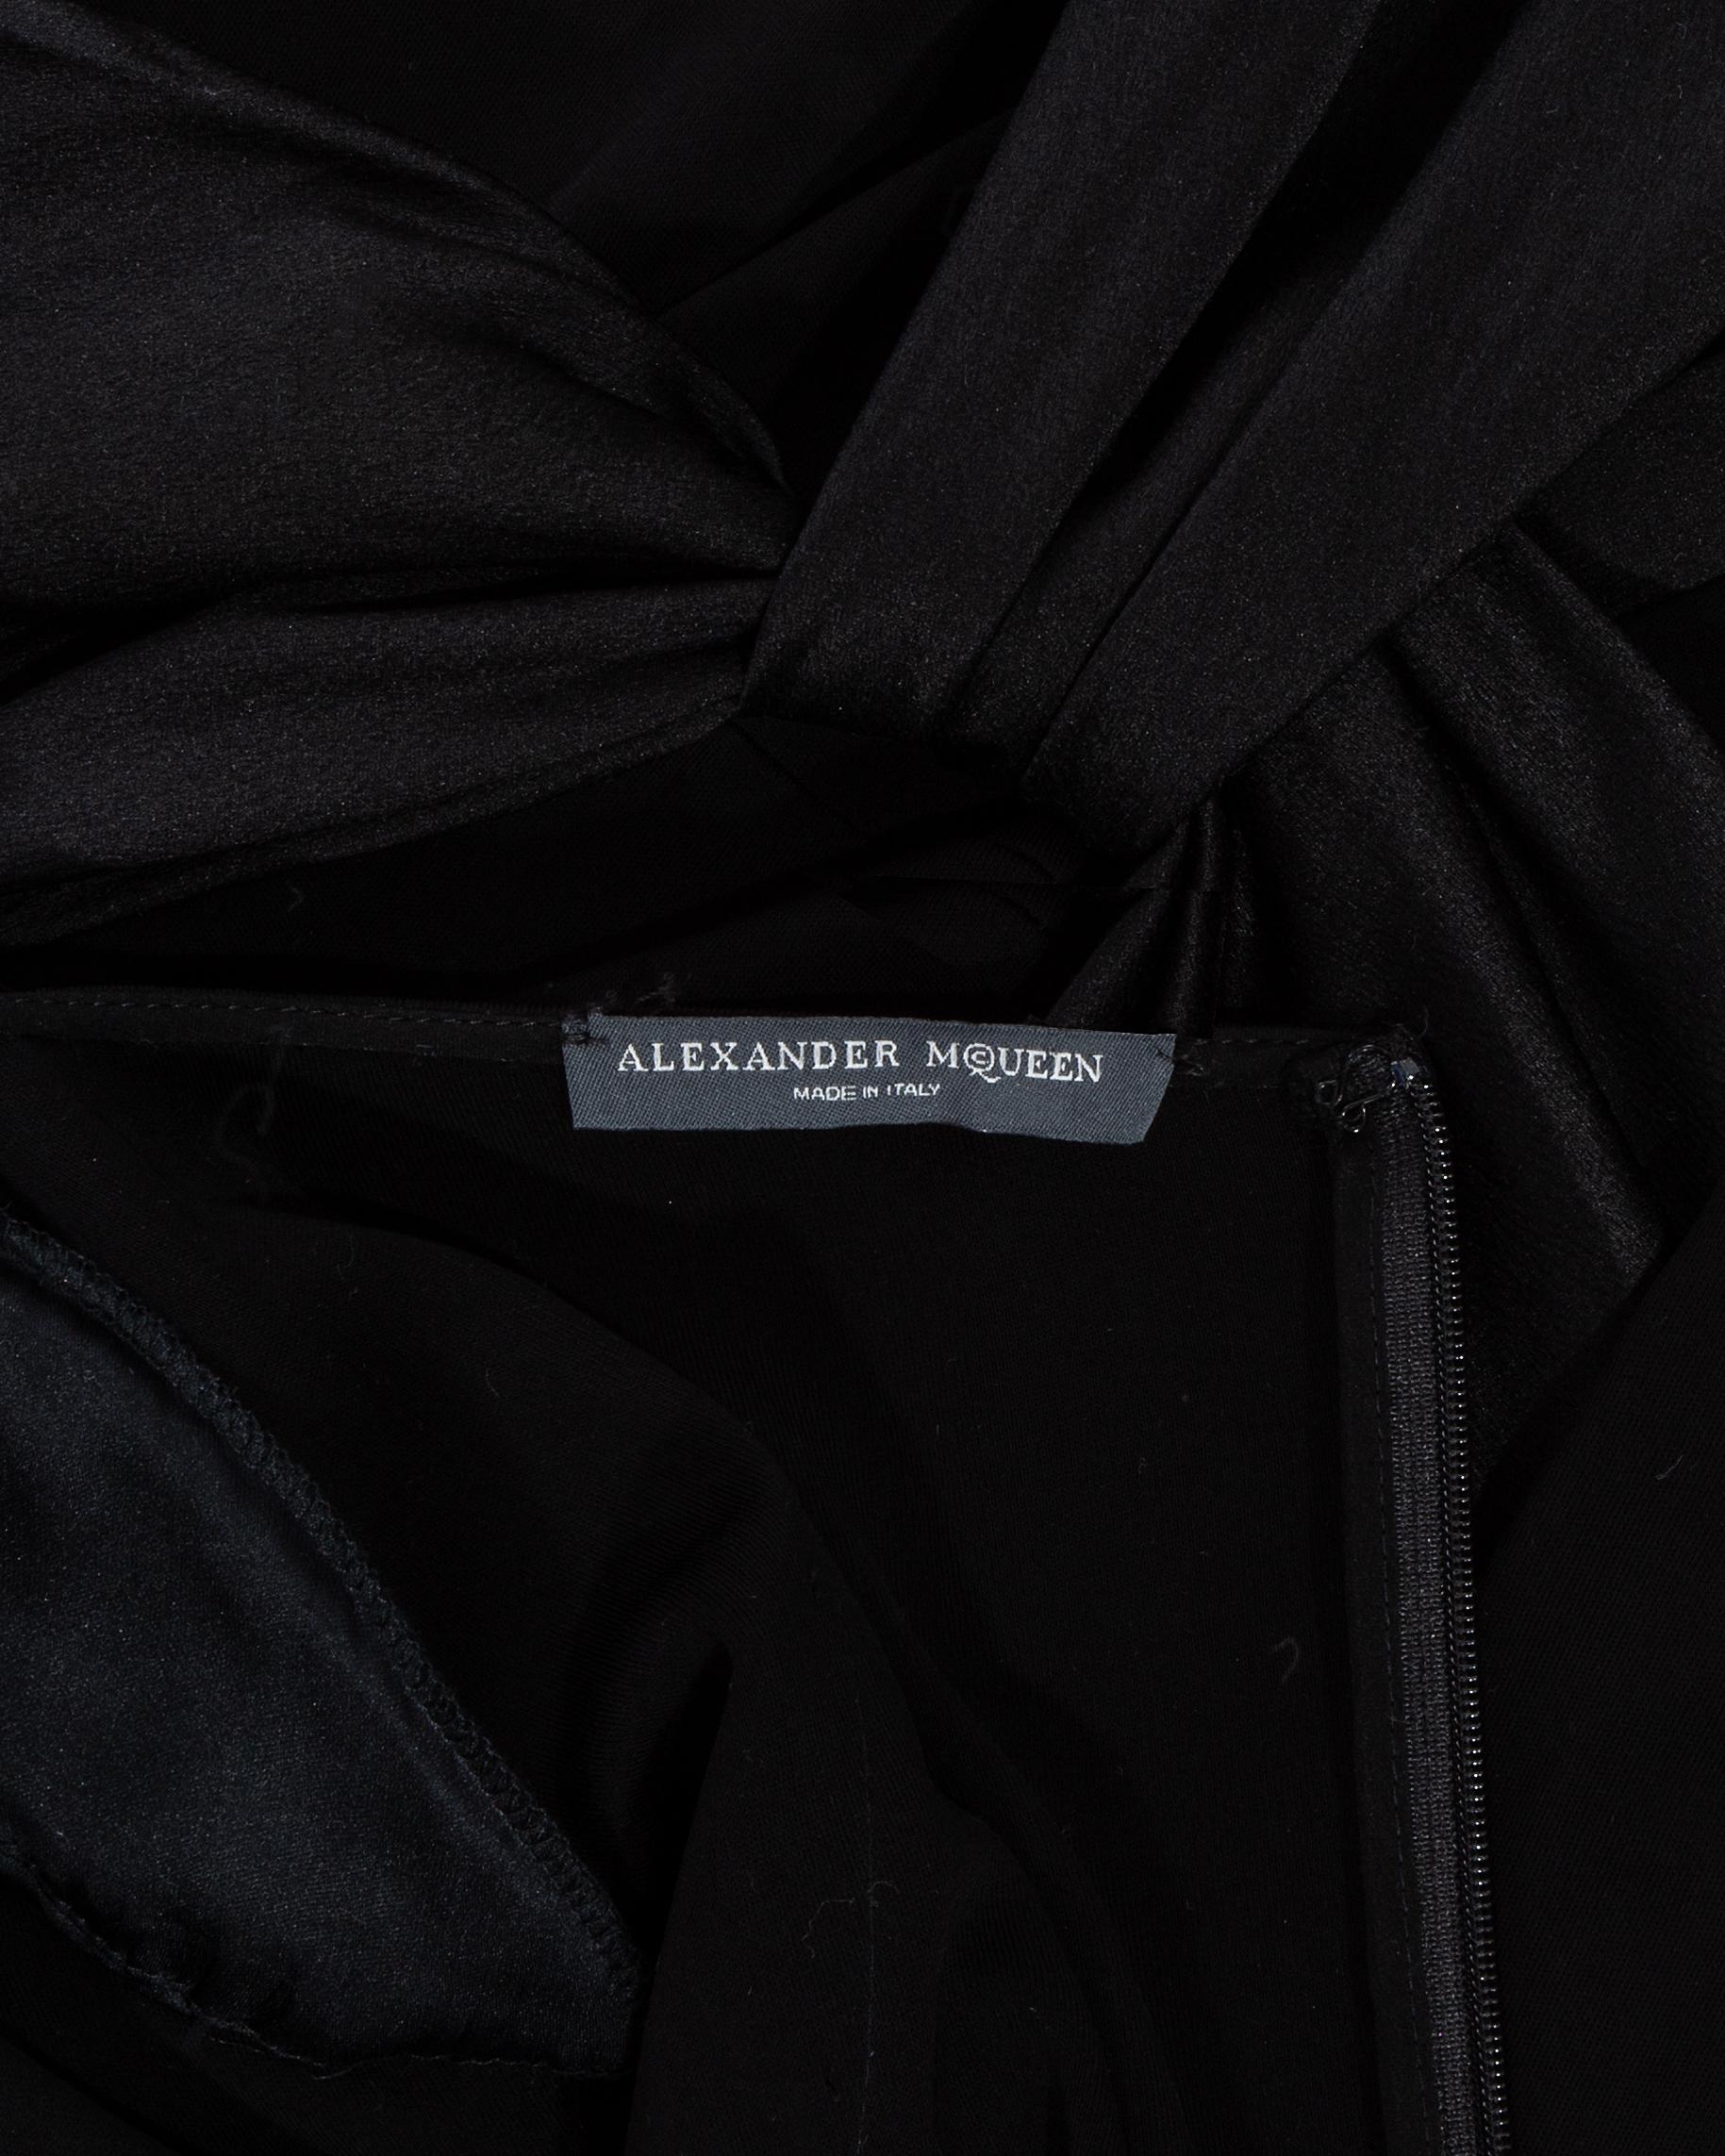 Alexander McQueen black silk scarf evening dress, fw 2004 2